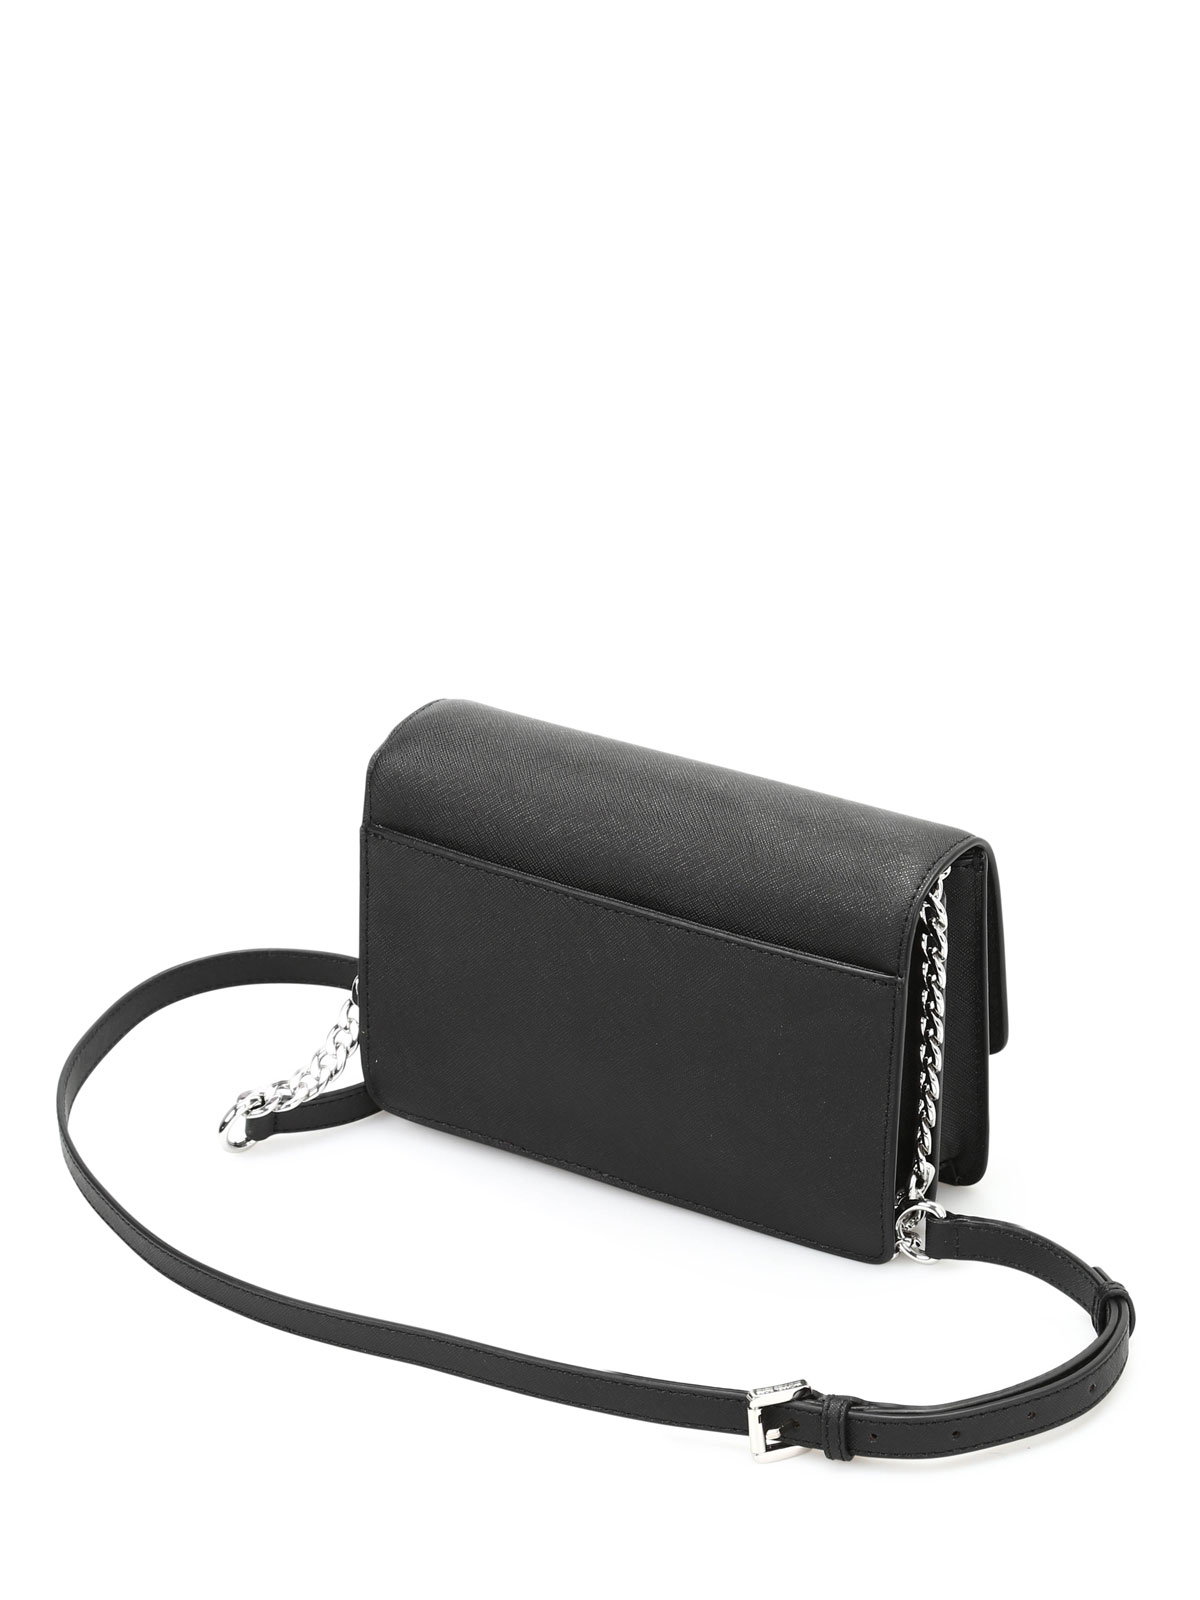 Michael Kors Daniela Small Saffiano Leather Crossbody Bag